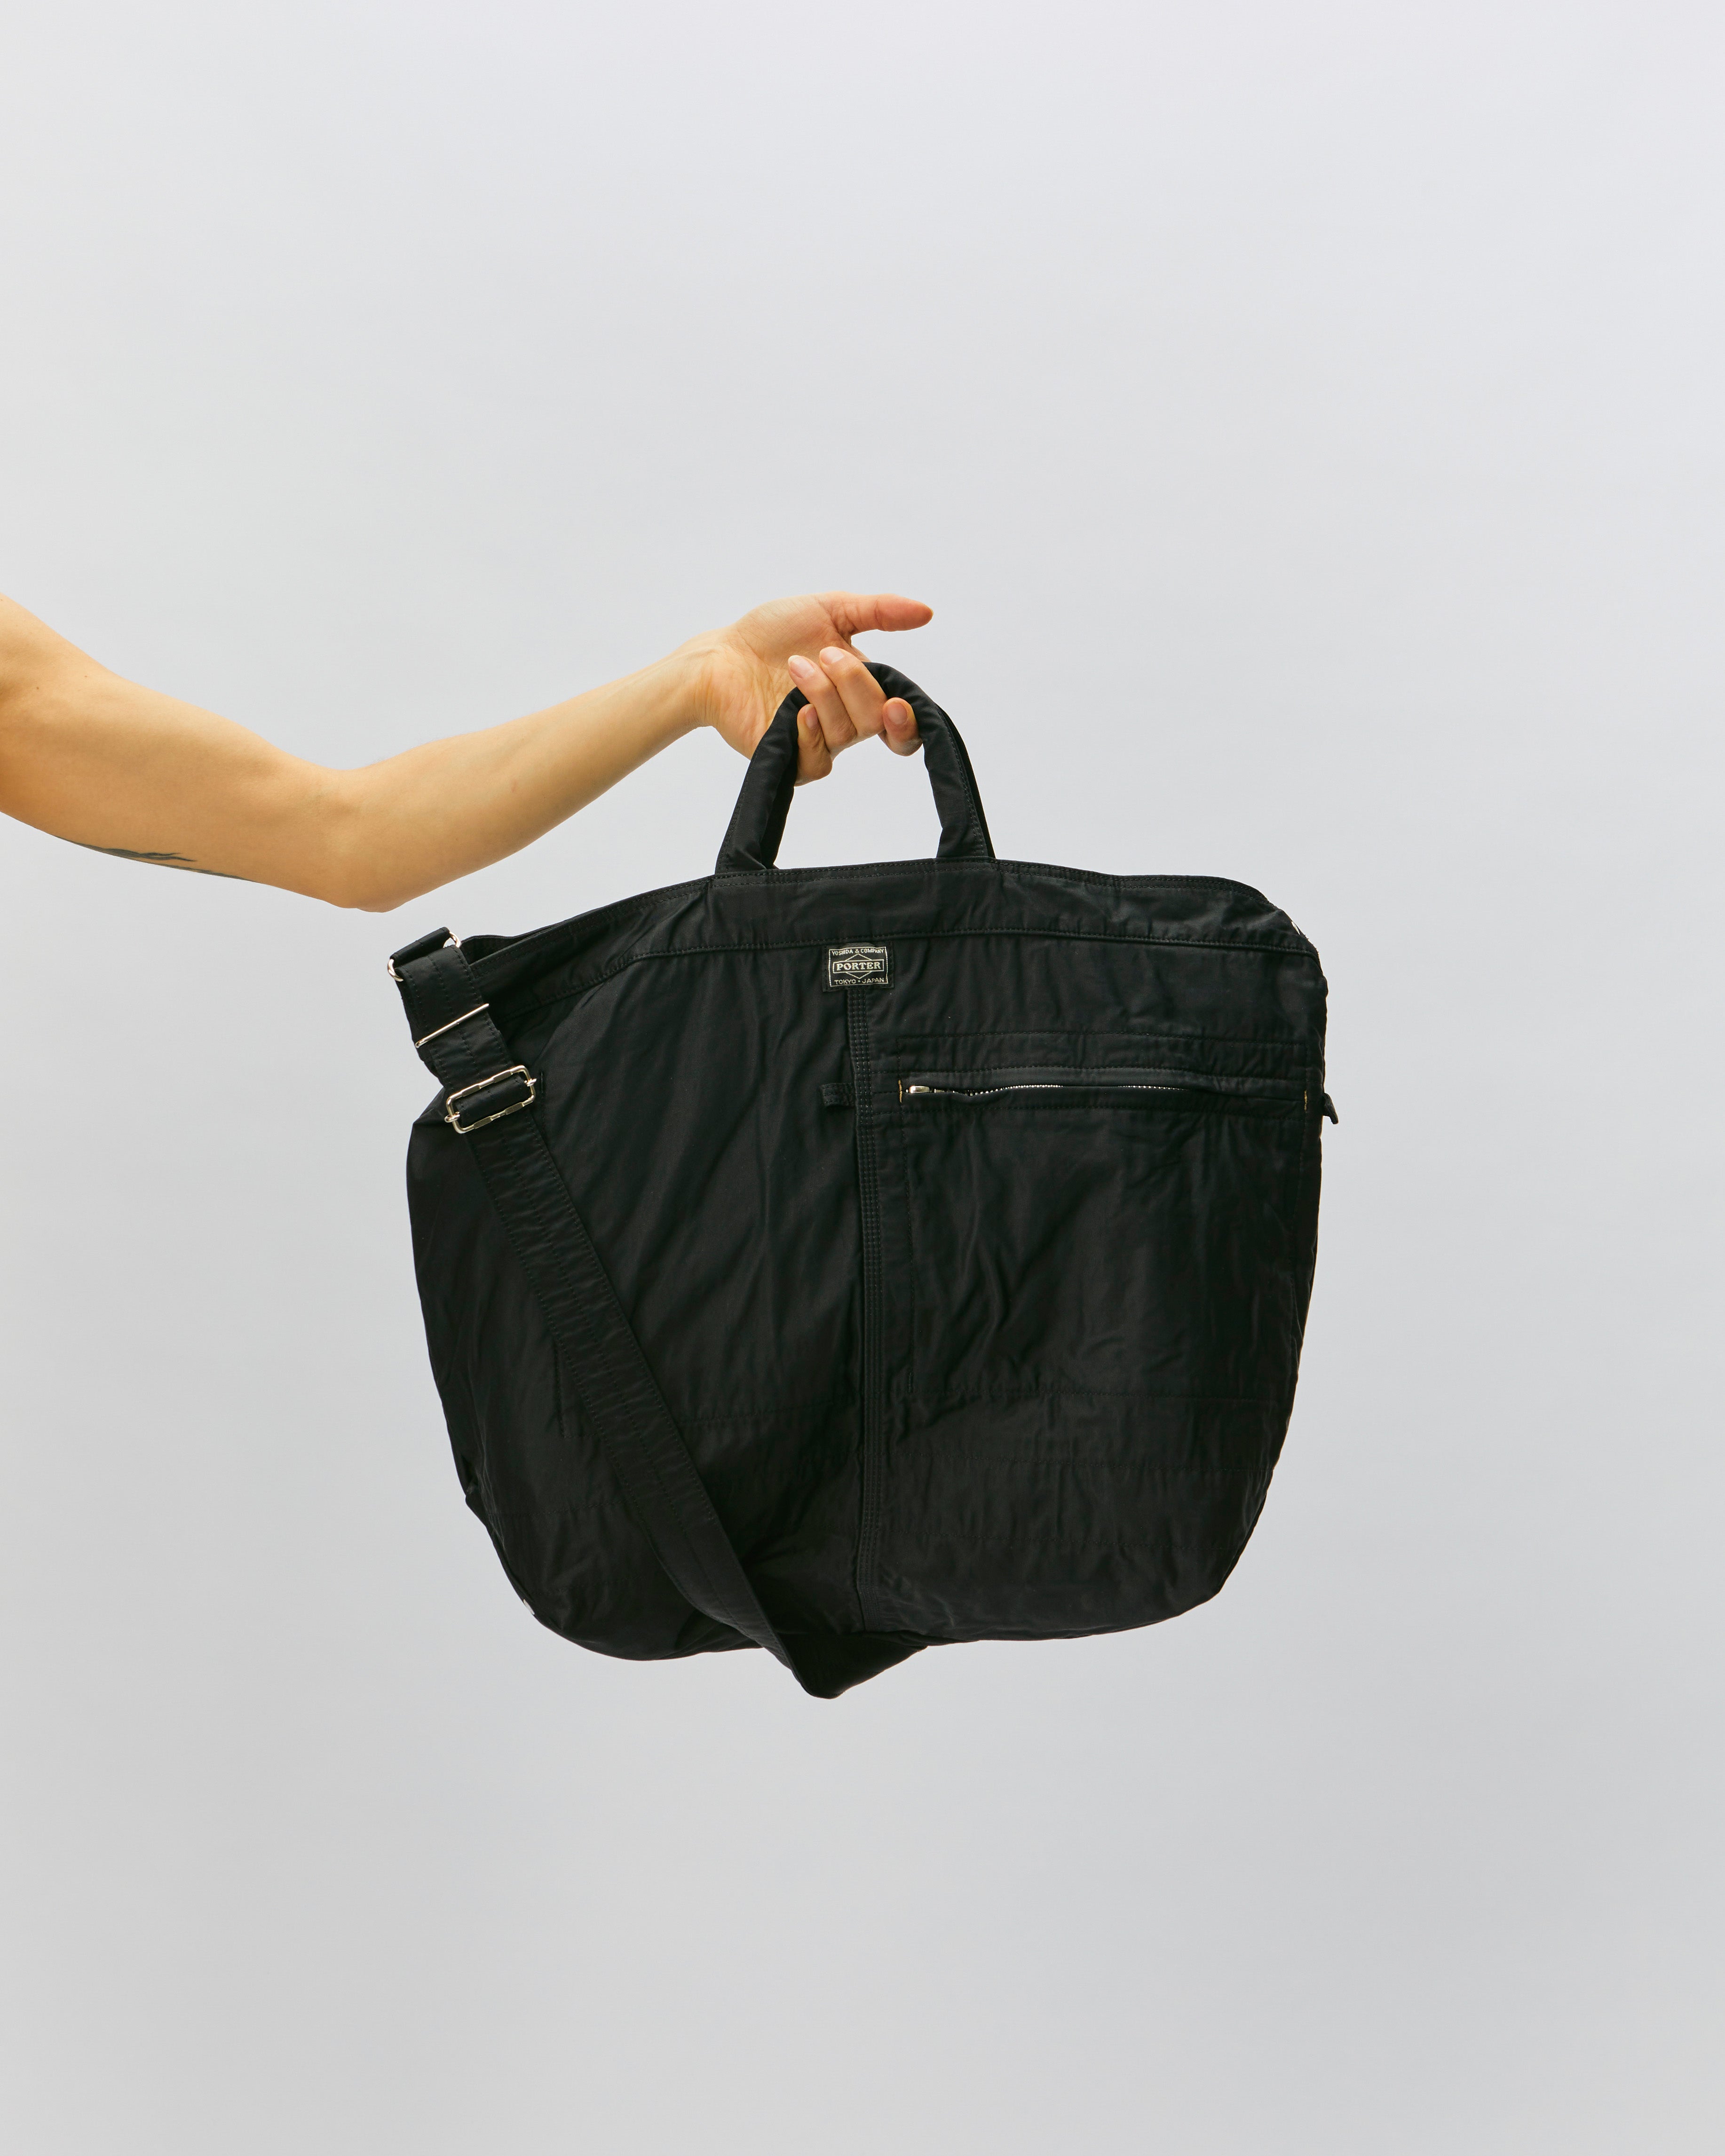 PORTER - Yoshida & Co Mile 2Way Tote Bag Large Black 754-15107-10